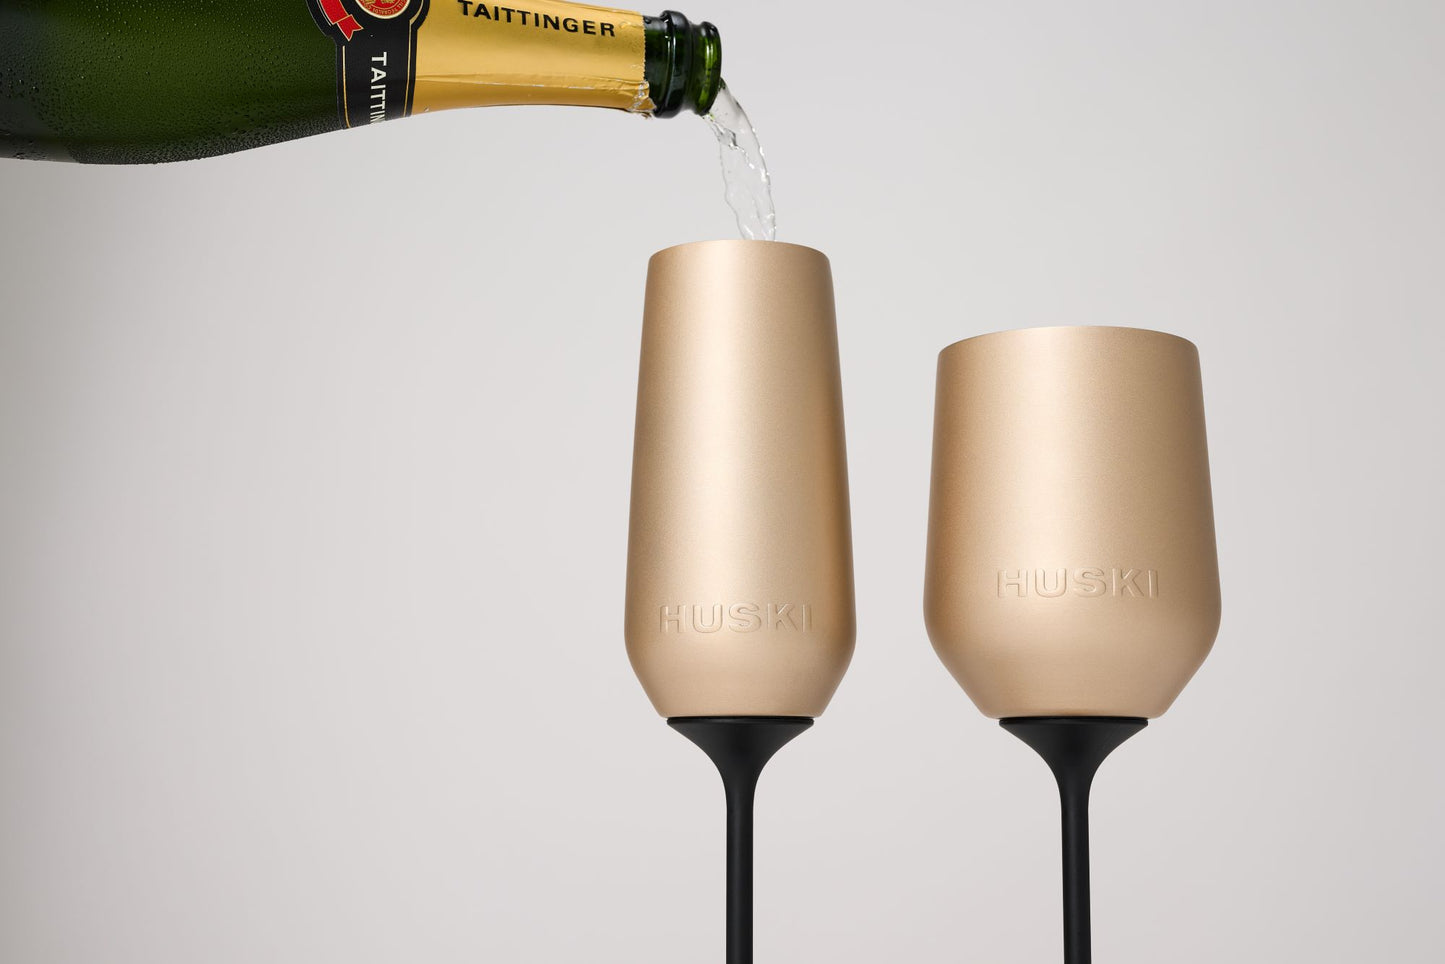 Huski Insulated Wine Tumbler 2.0